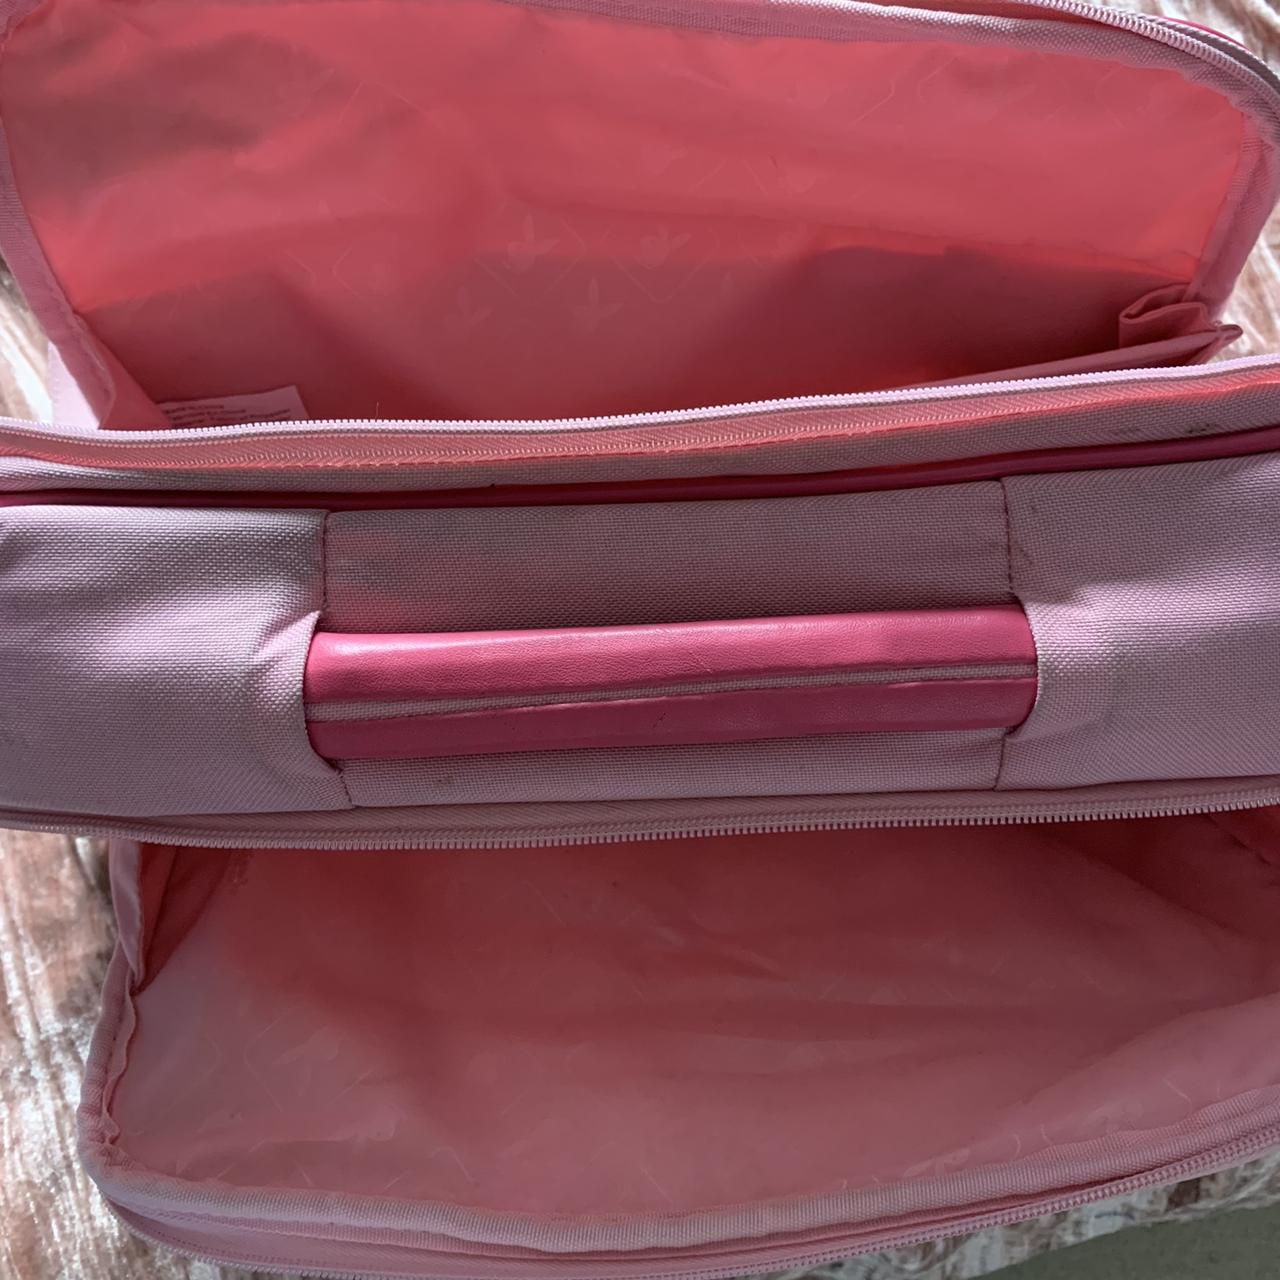 Playboy Women's Pink Bag | Depop